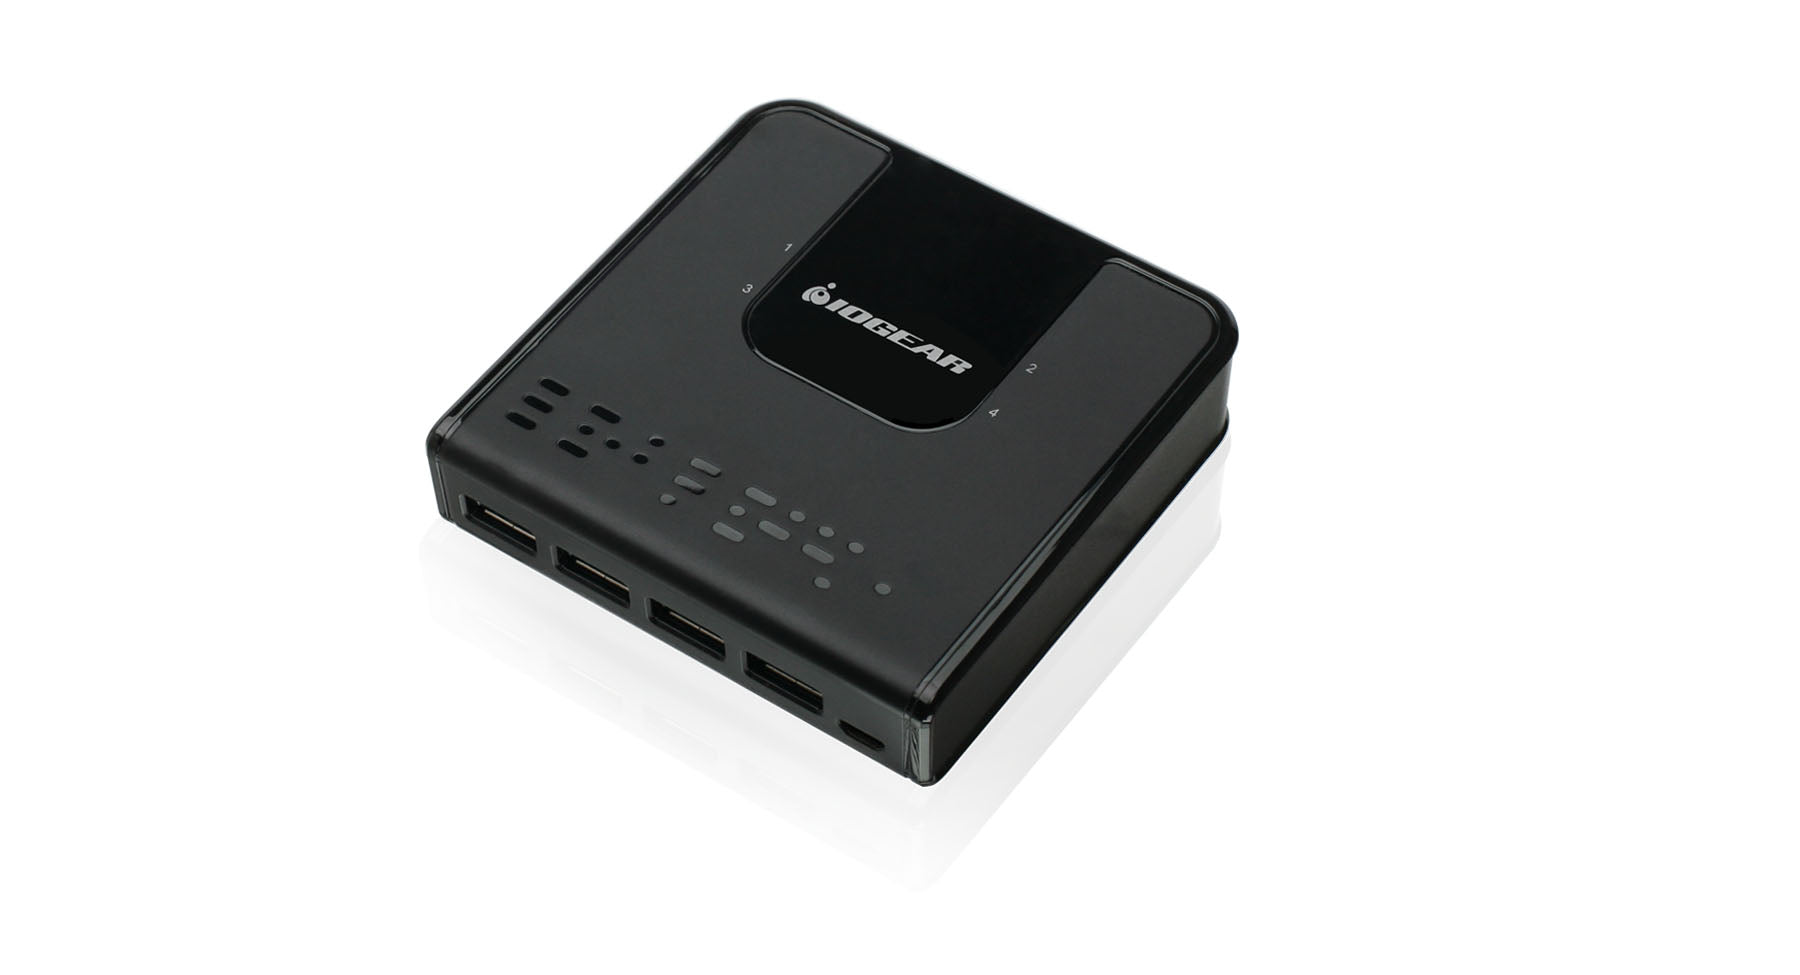 4x4 USB 3.0 Peripheral Sharing Switch